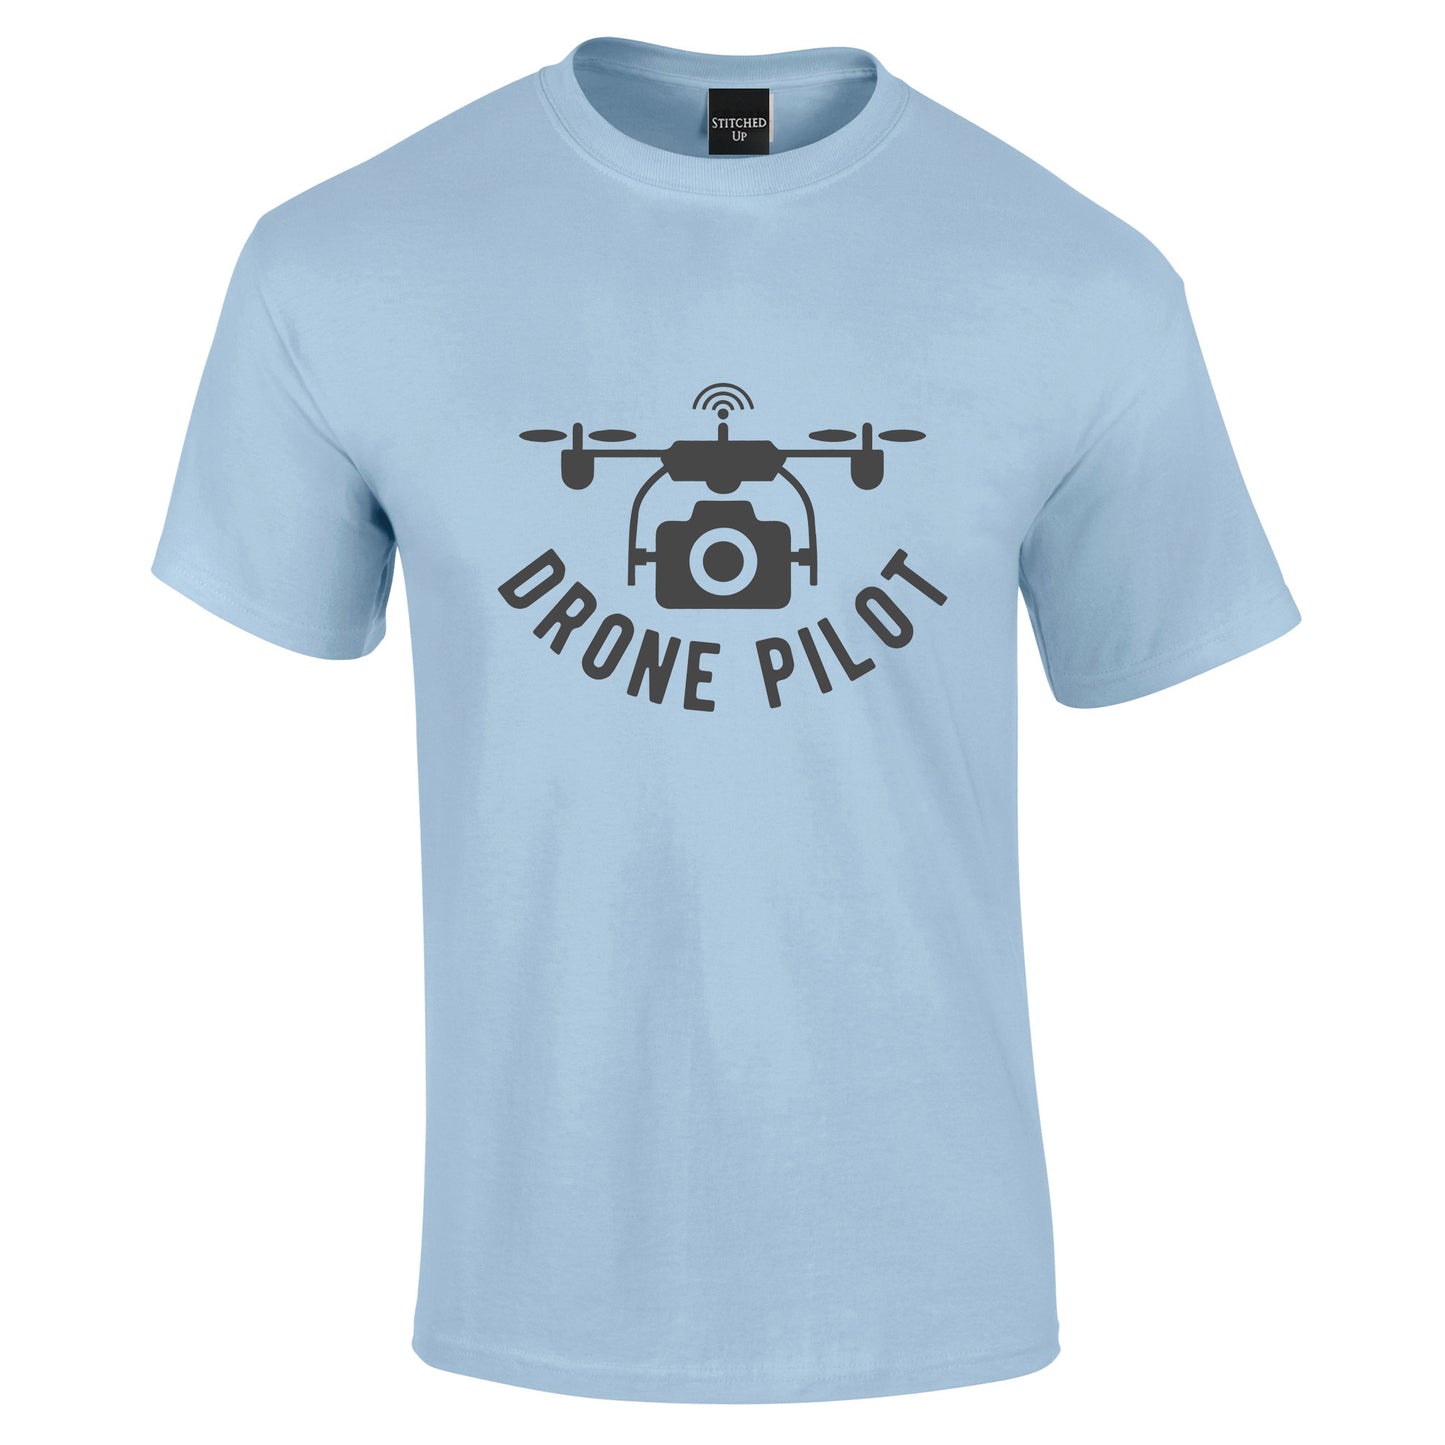 Drone Pilot T-Shirt